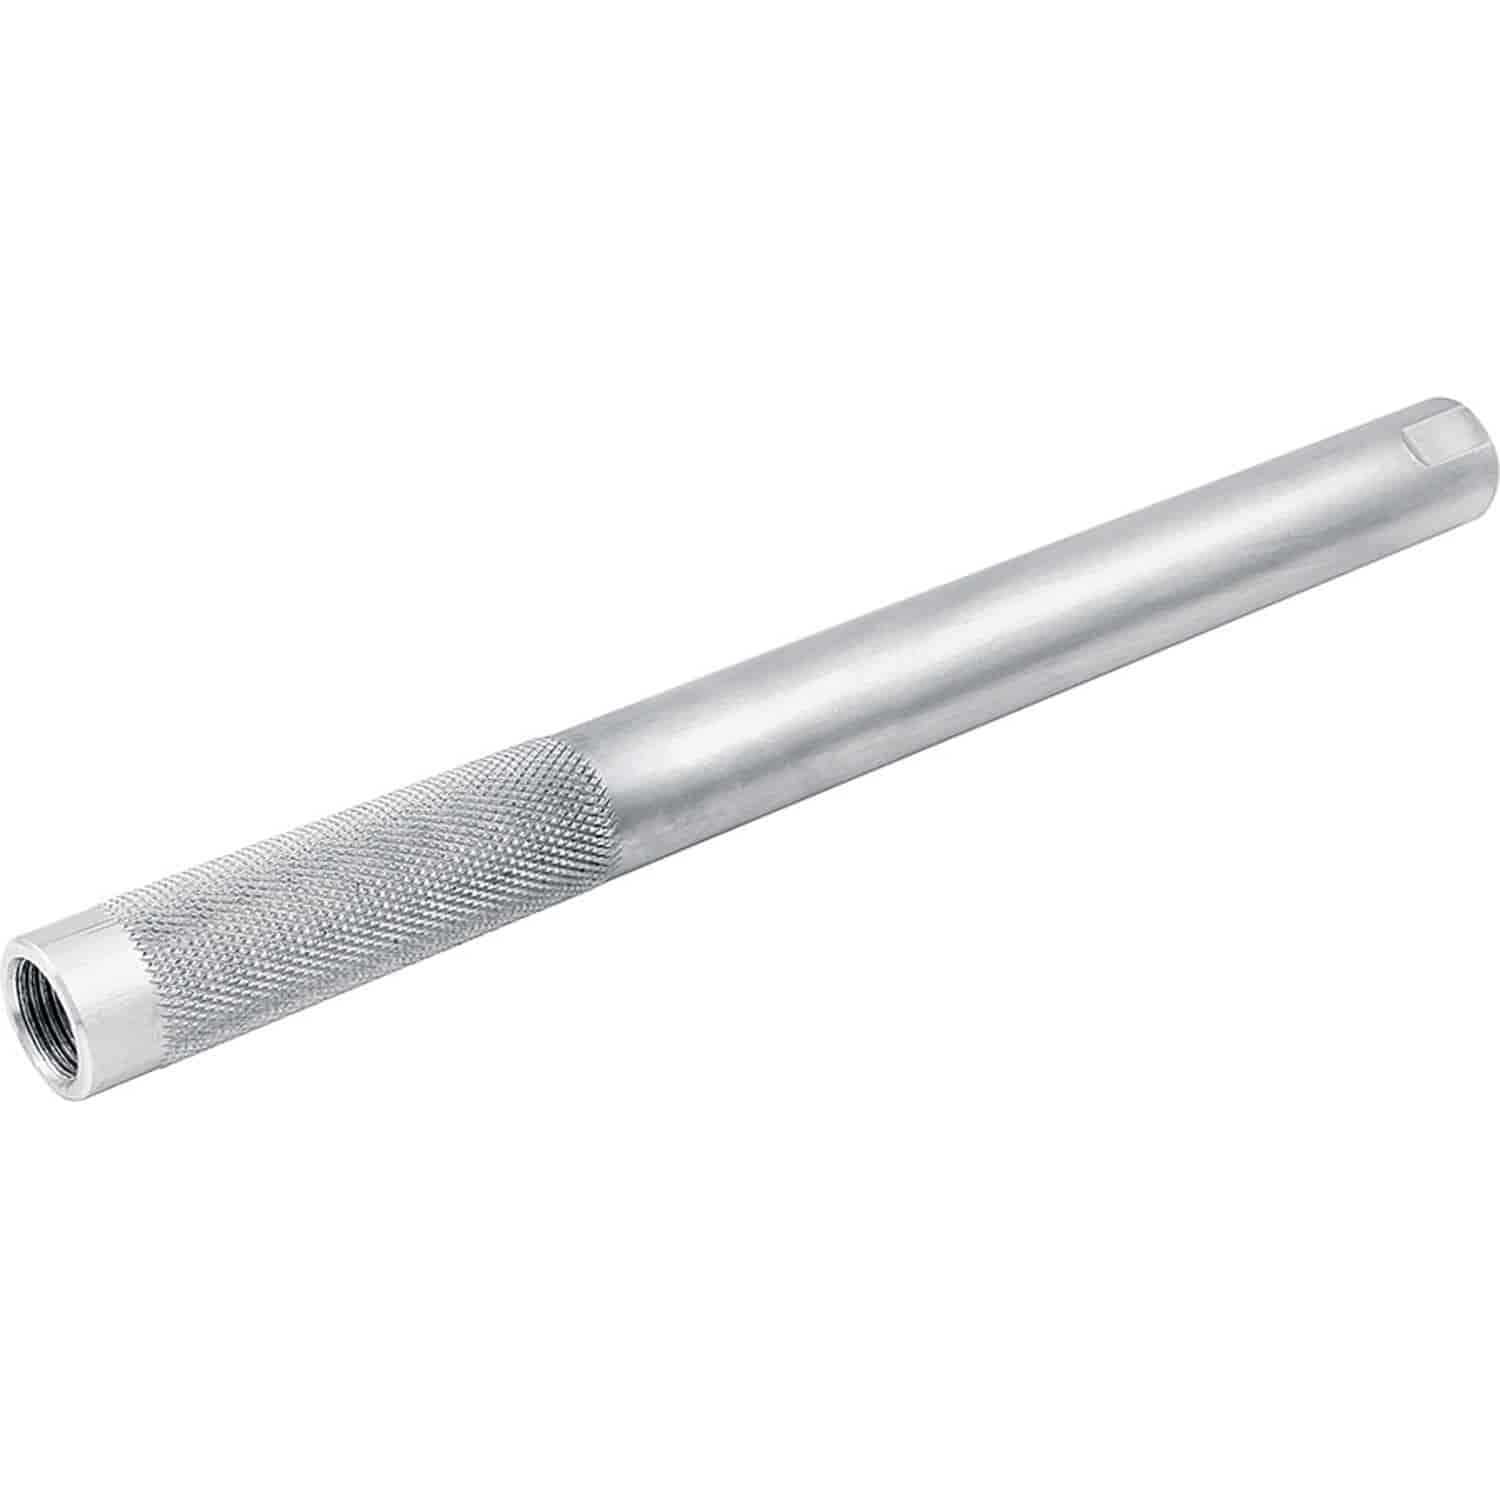 Swedged Aluminum Tie Rod Tube Length: 18"